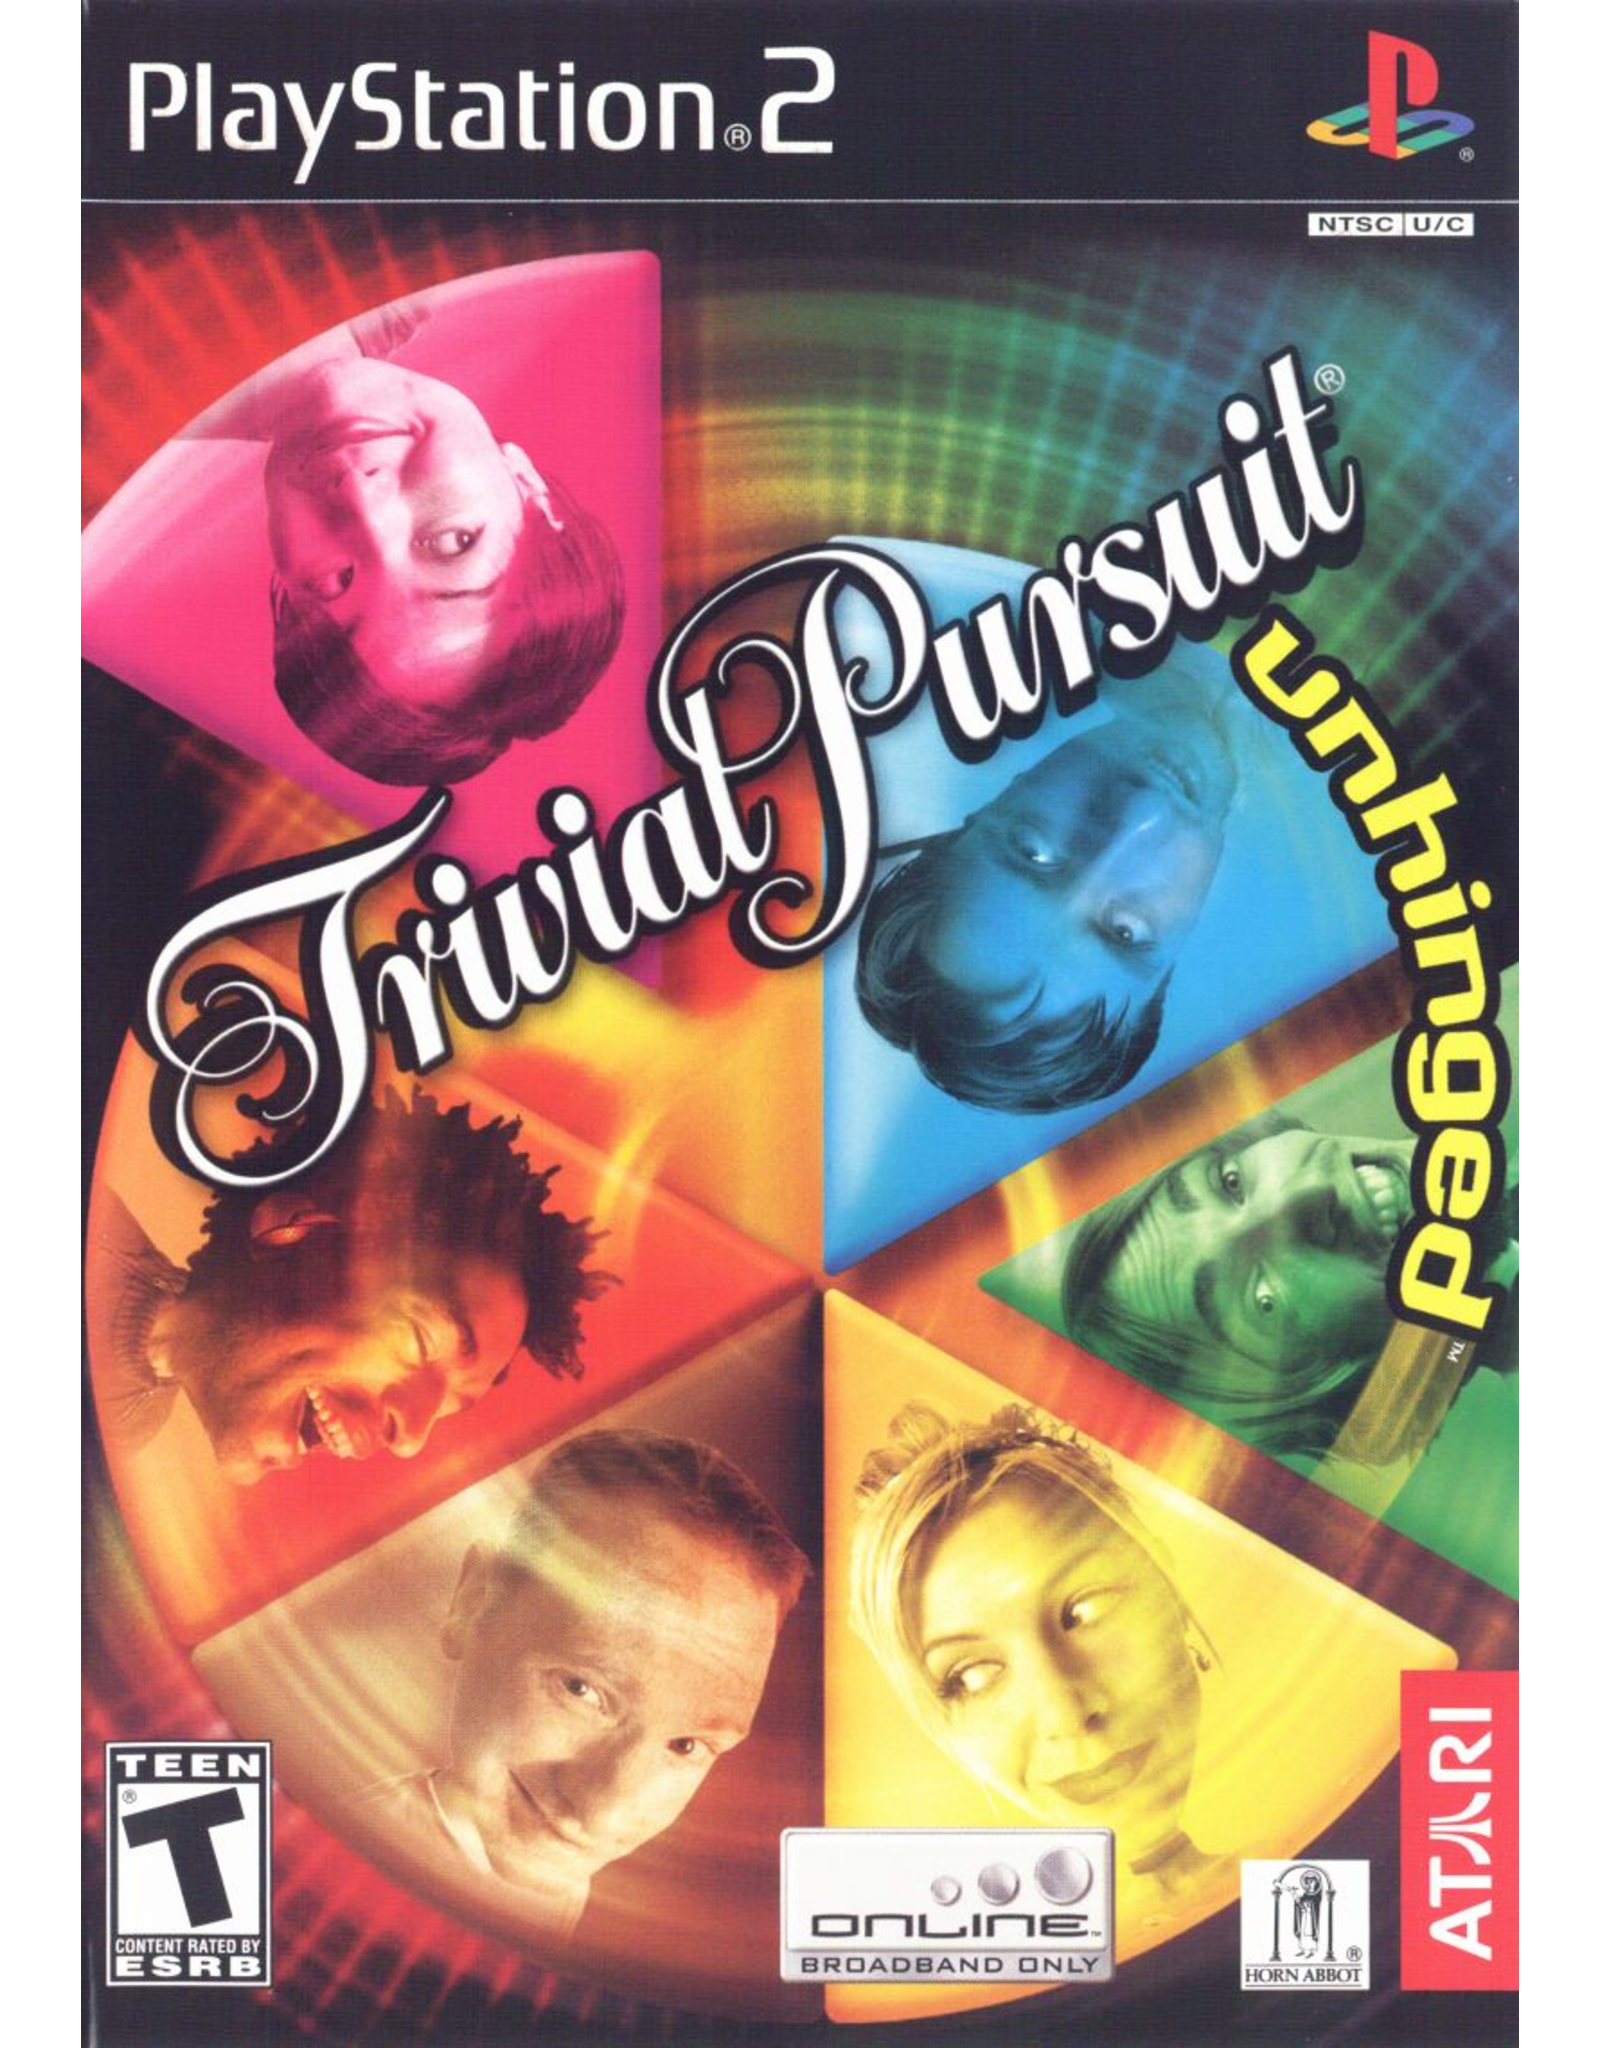 Playstation 2 Trivial Pursuit Unhinged (No Manual)